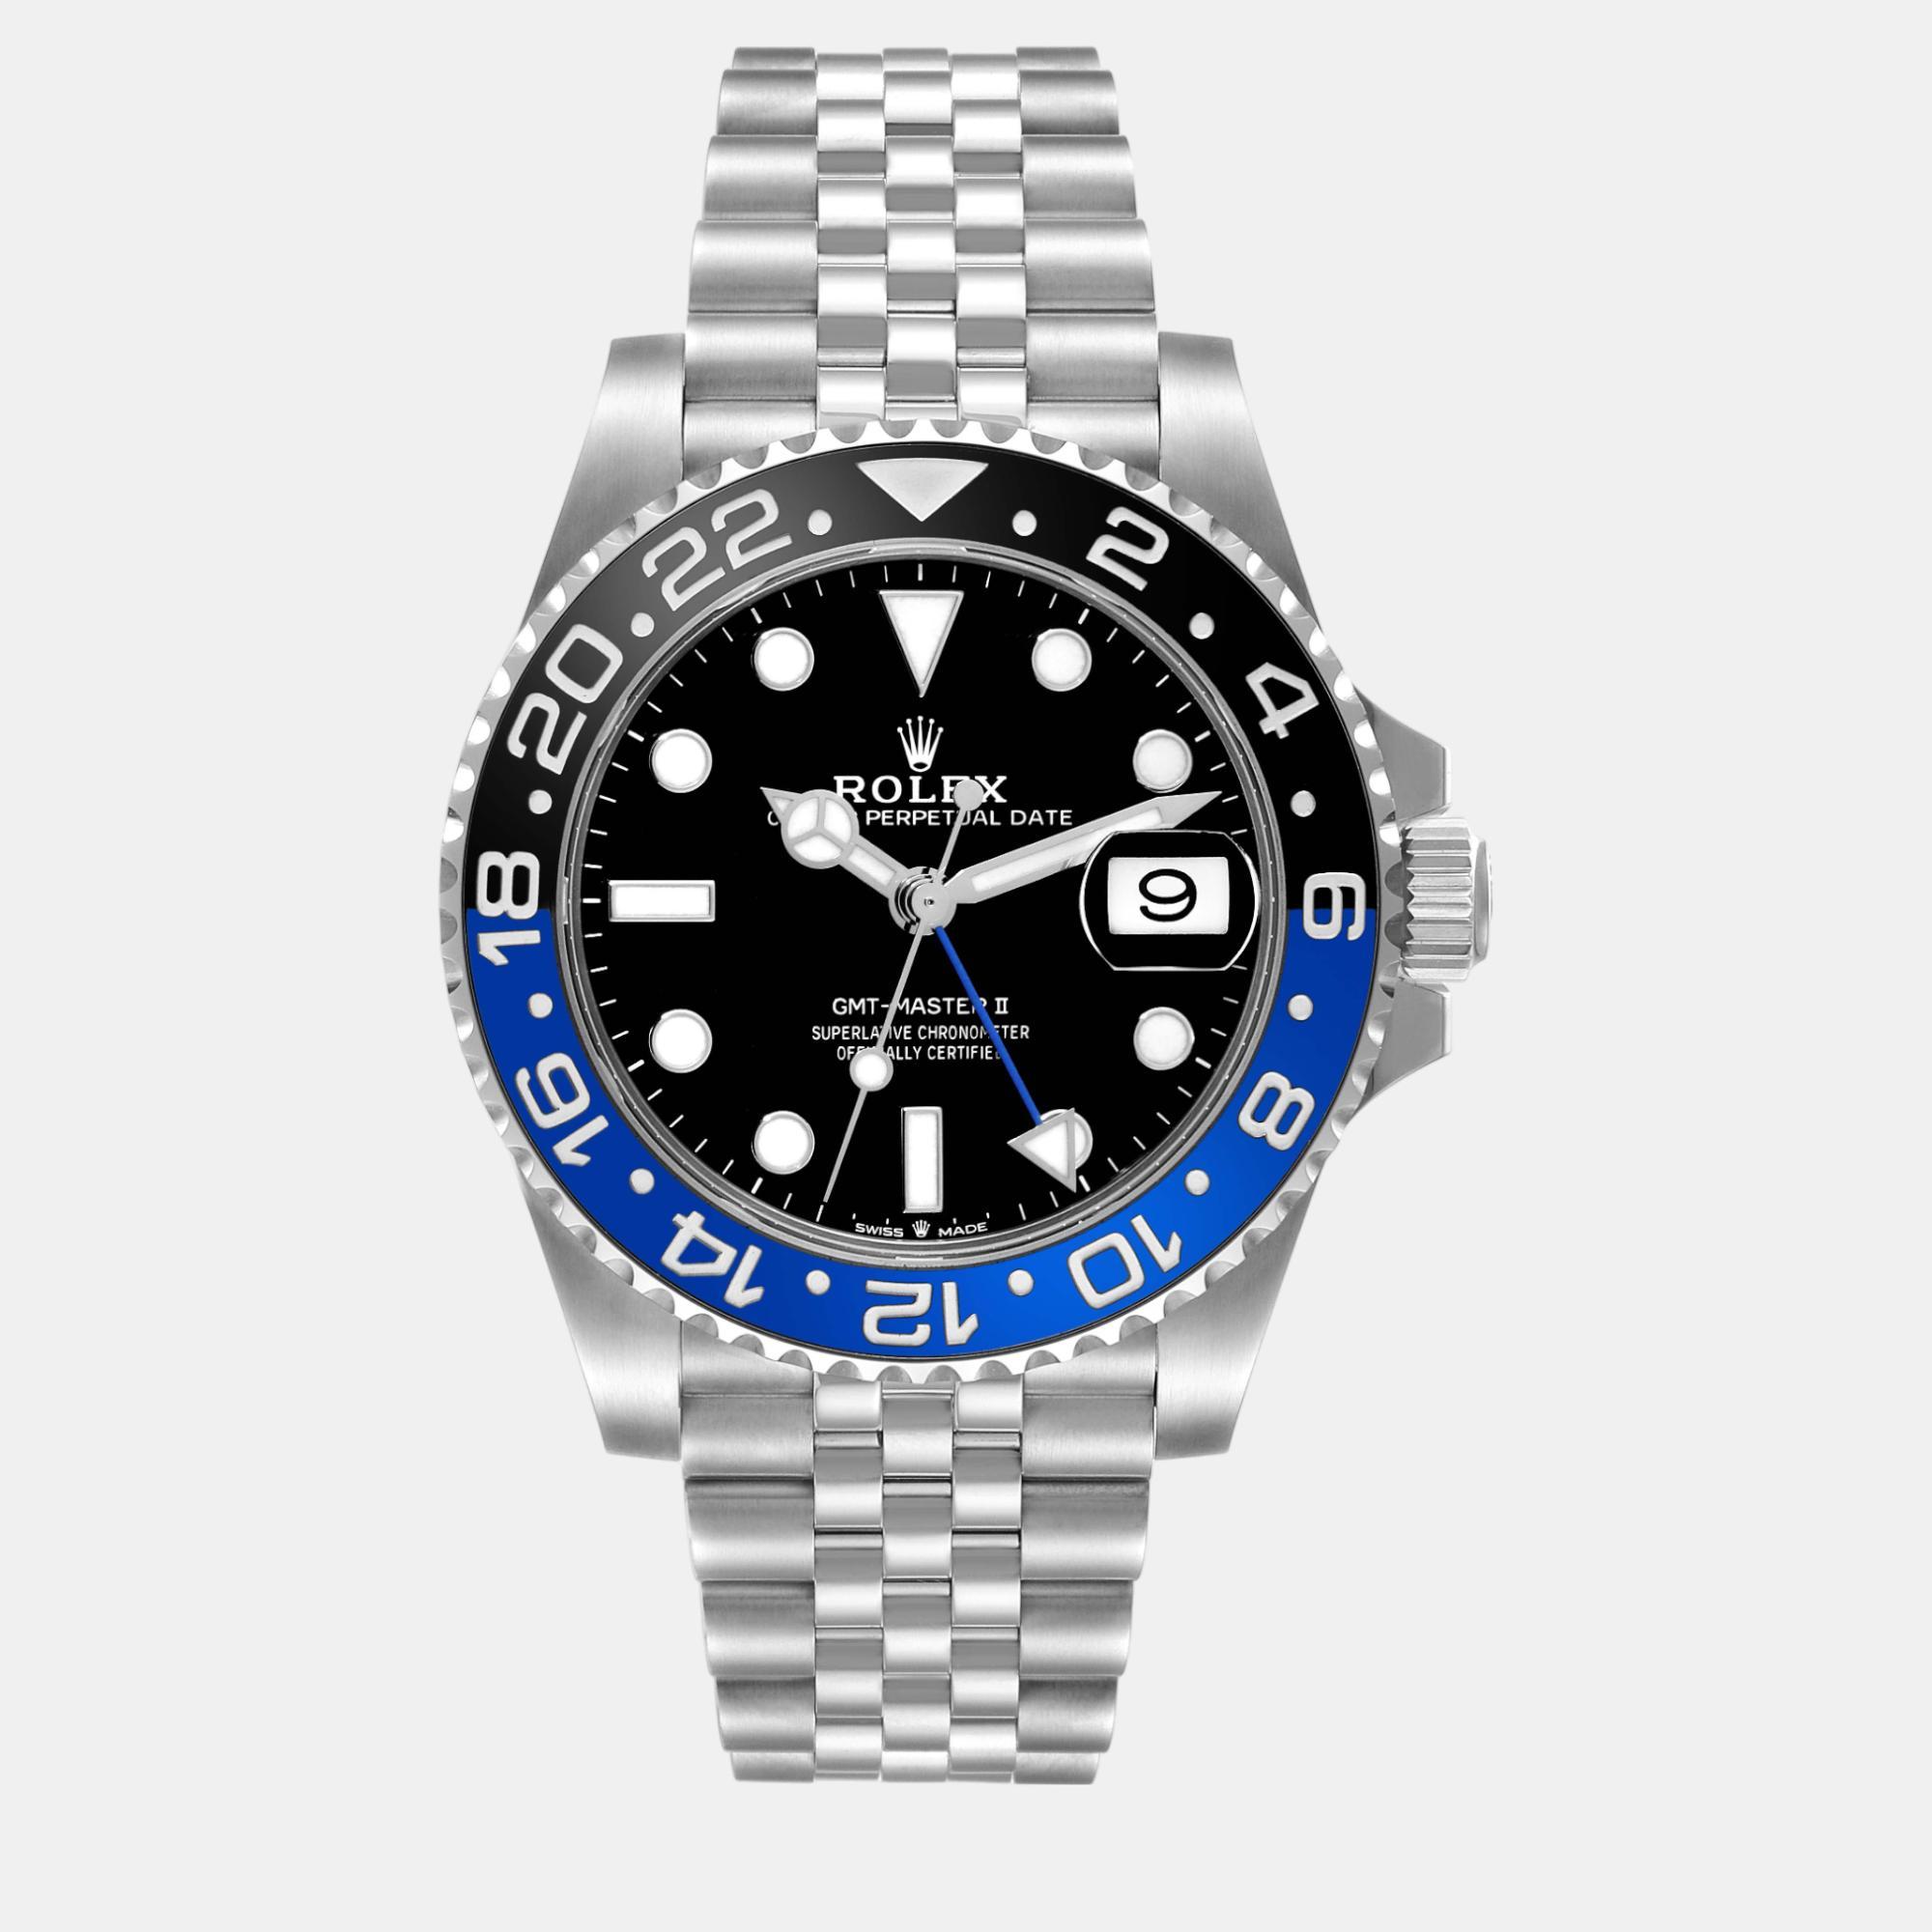 Rolex gmt master ii batgirl black blue bezel steel men's watch 126710 40 mm